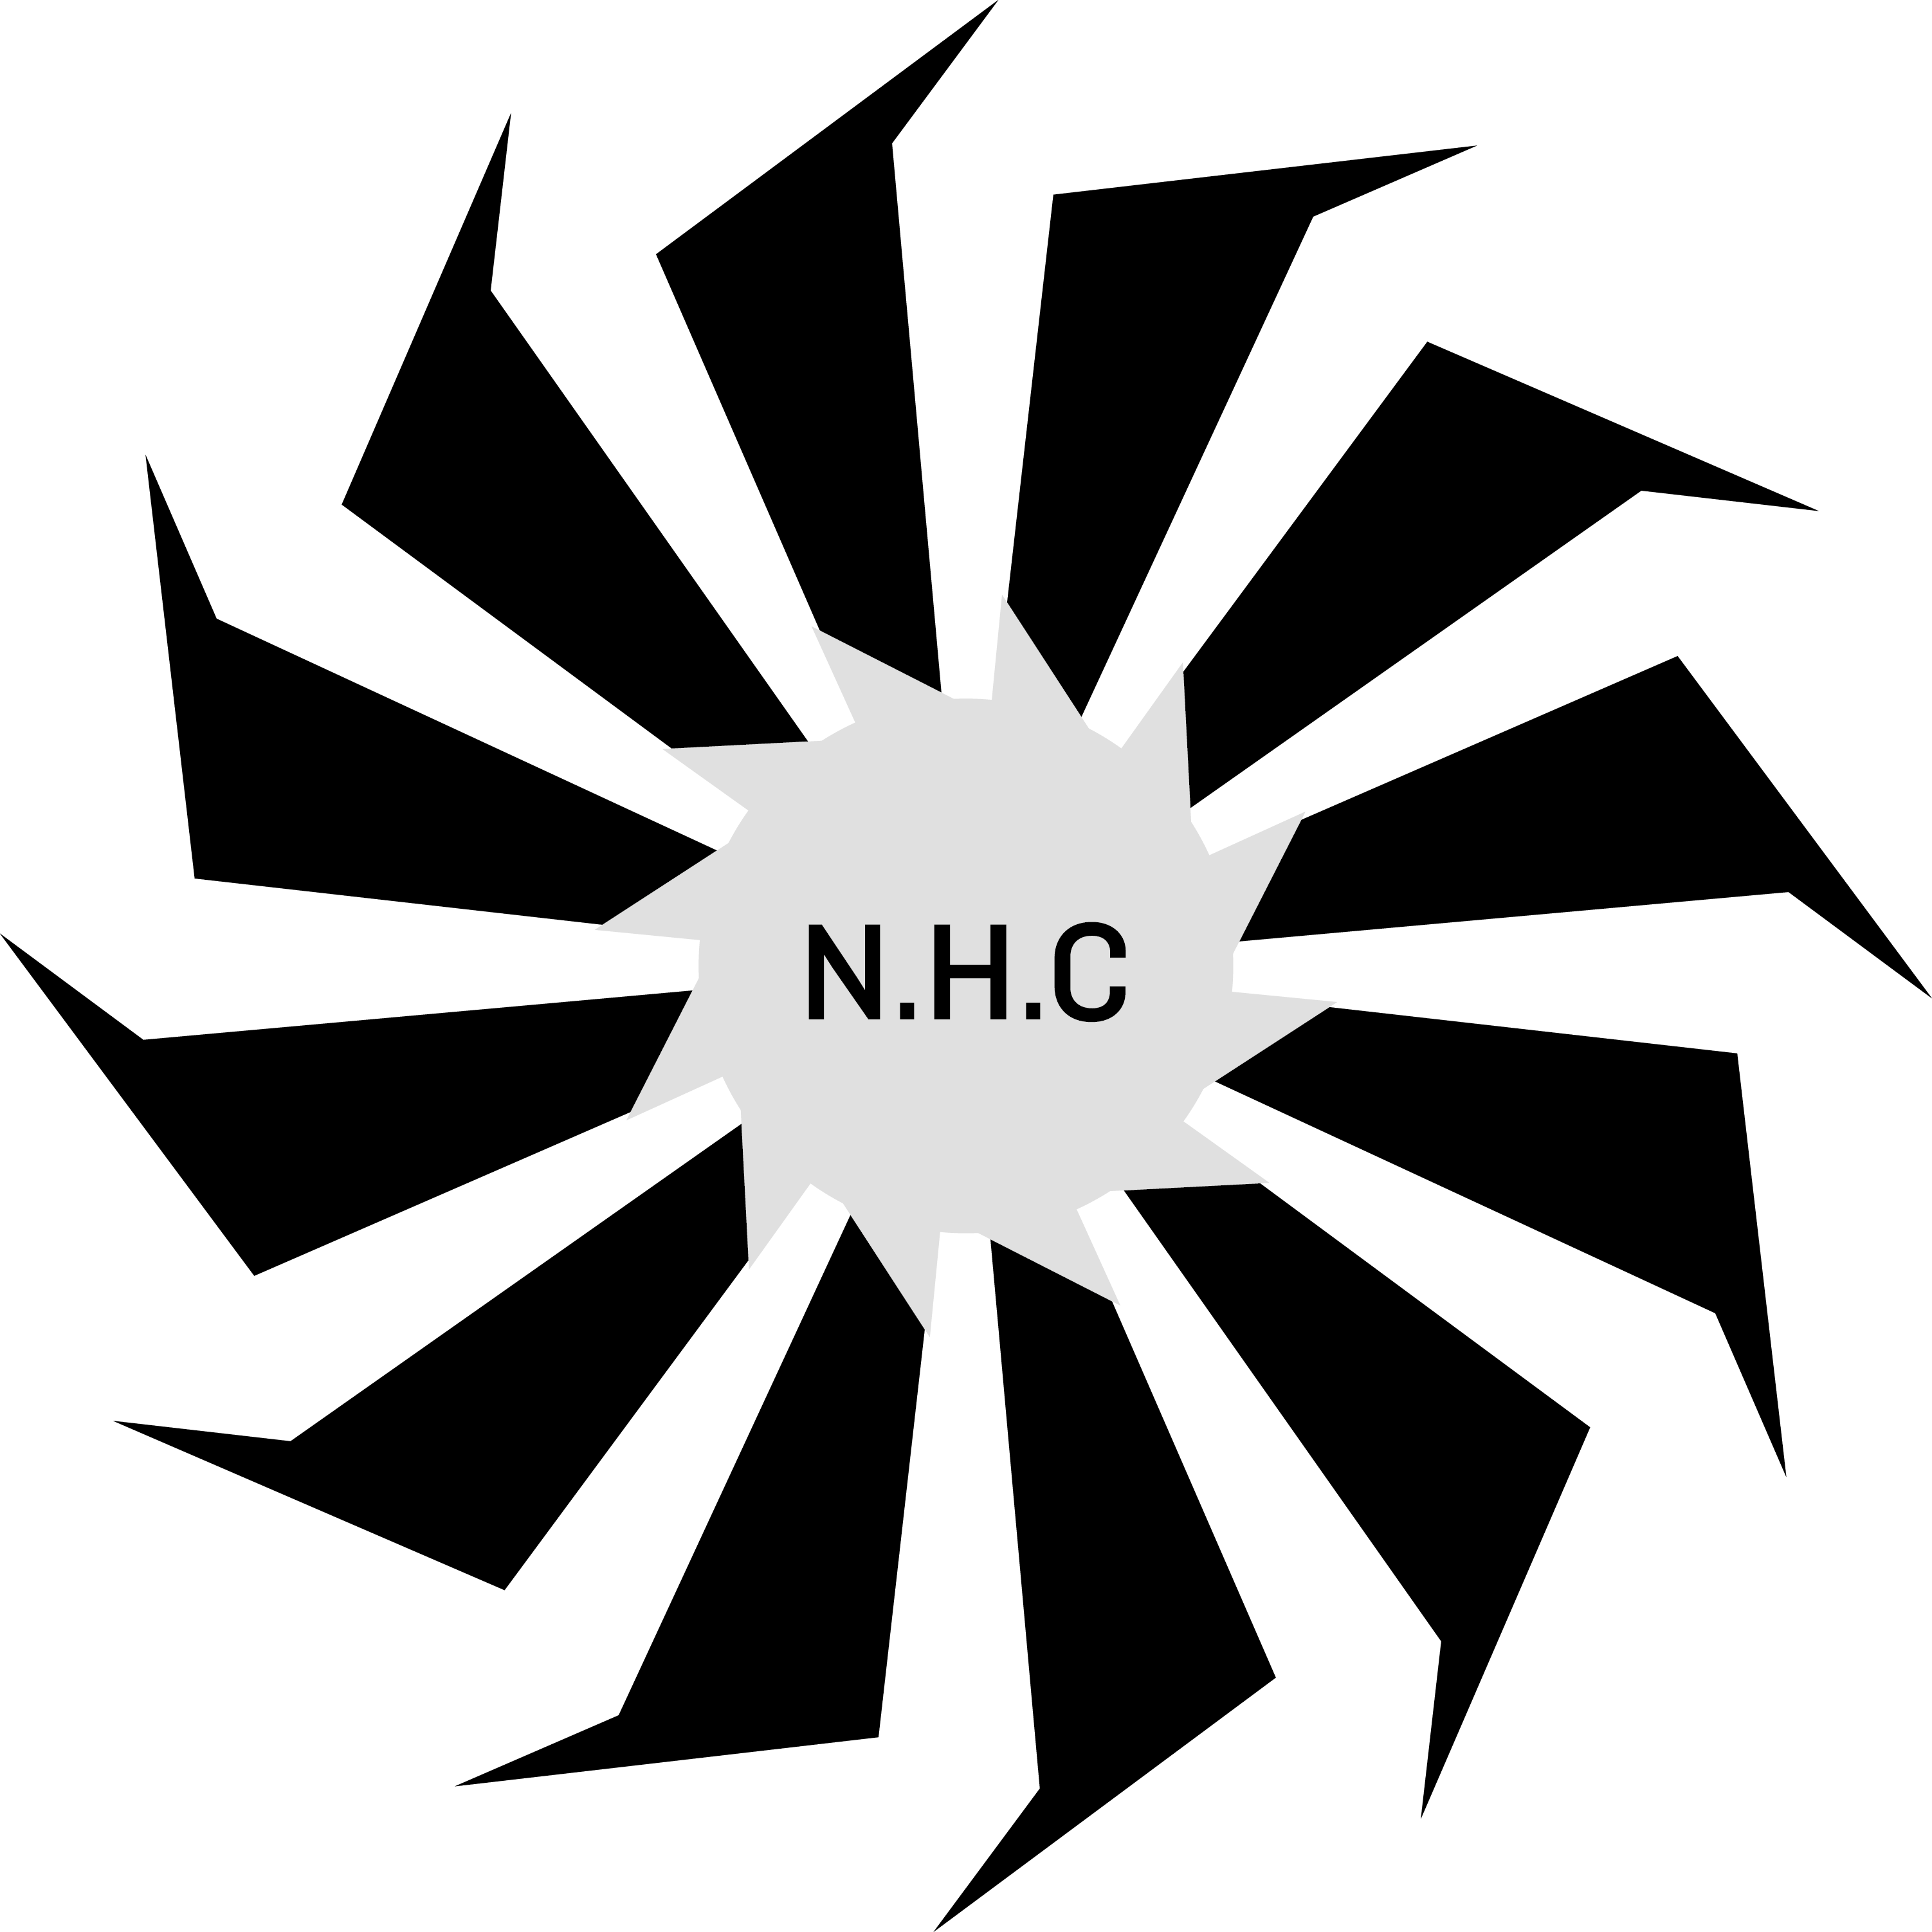 N.H.C logo